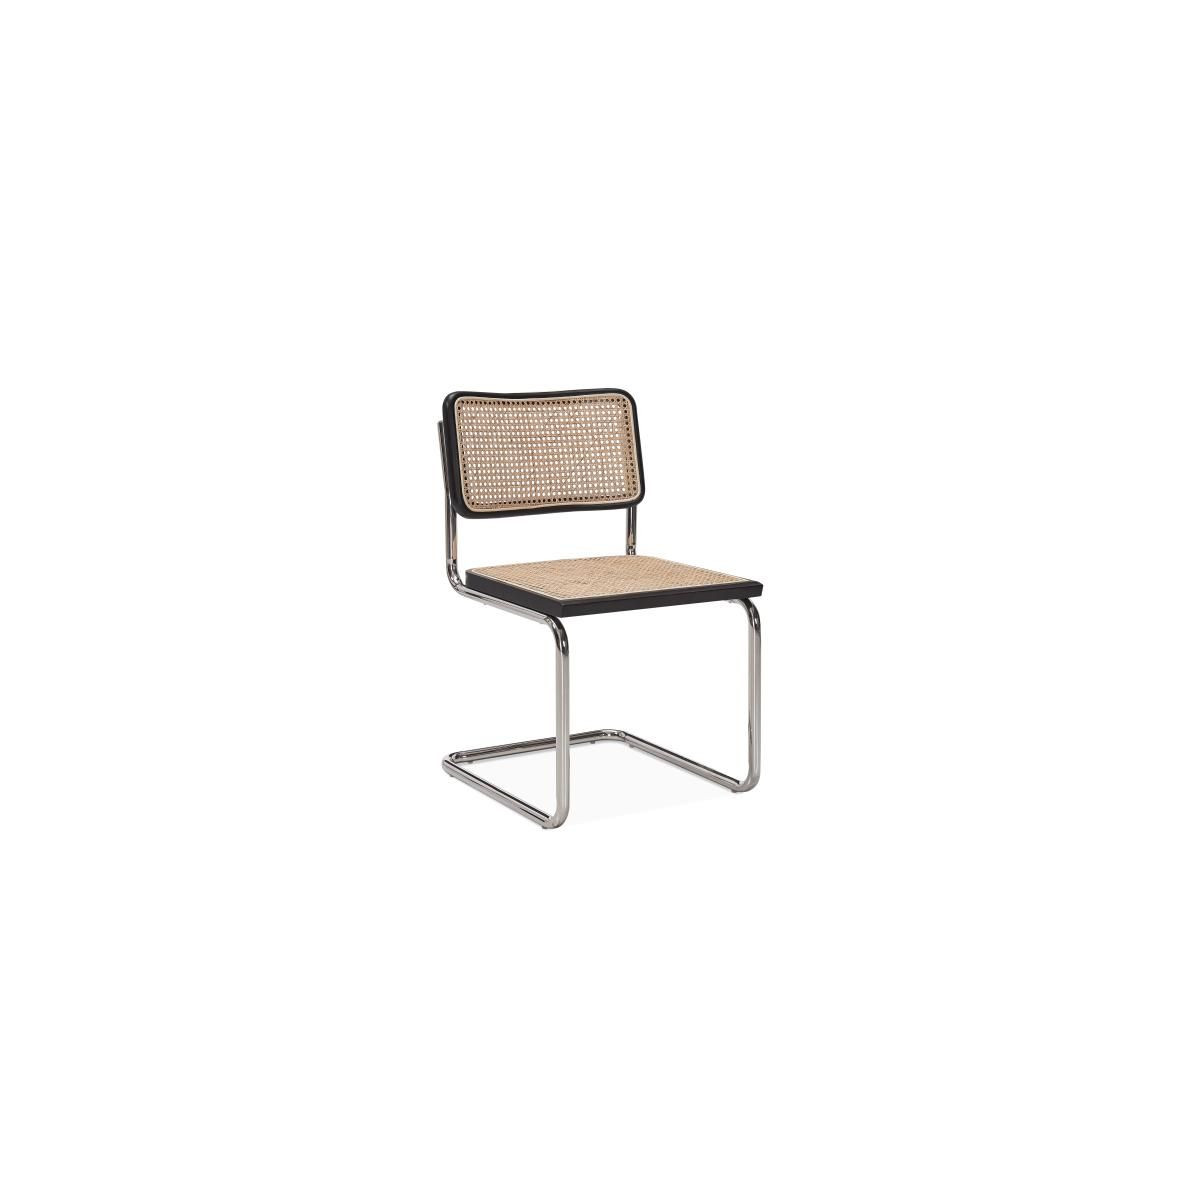 Dining Chair : SZ-C519 / A